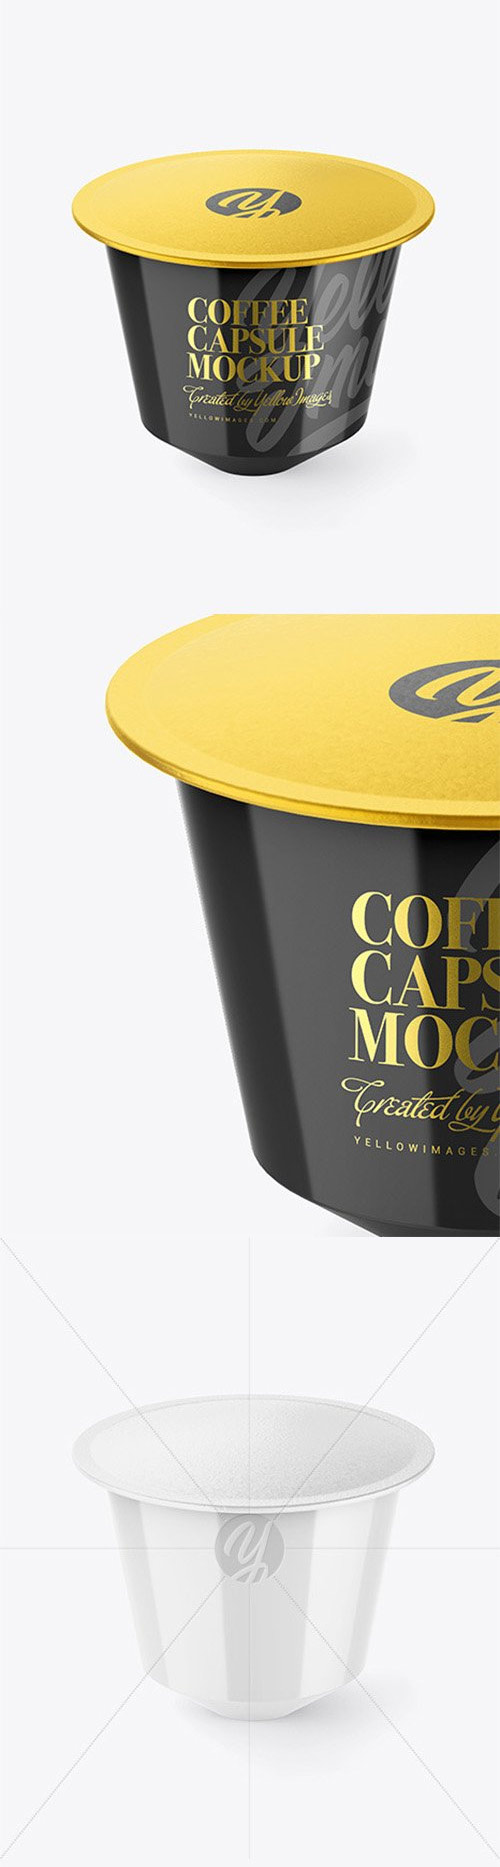 Glossy Coffee Capsule Mockup 62893